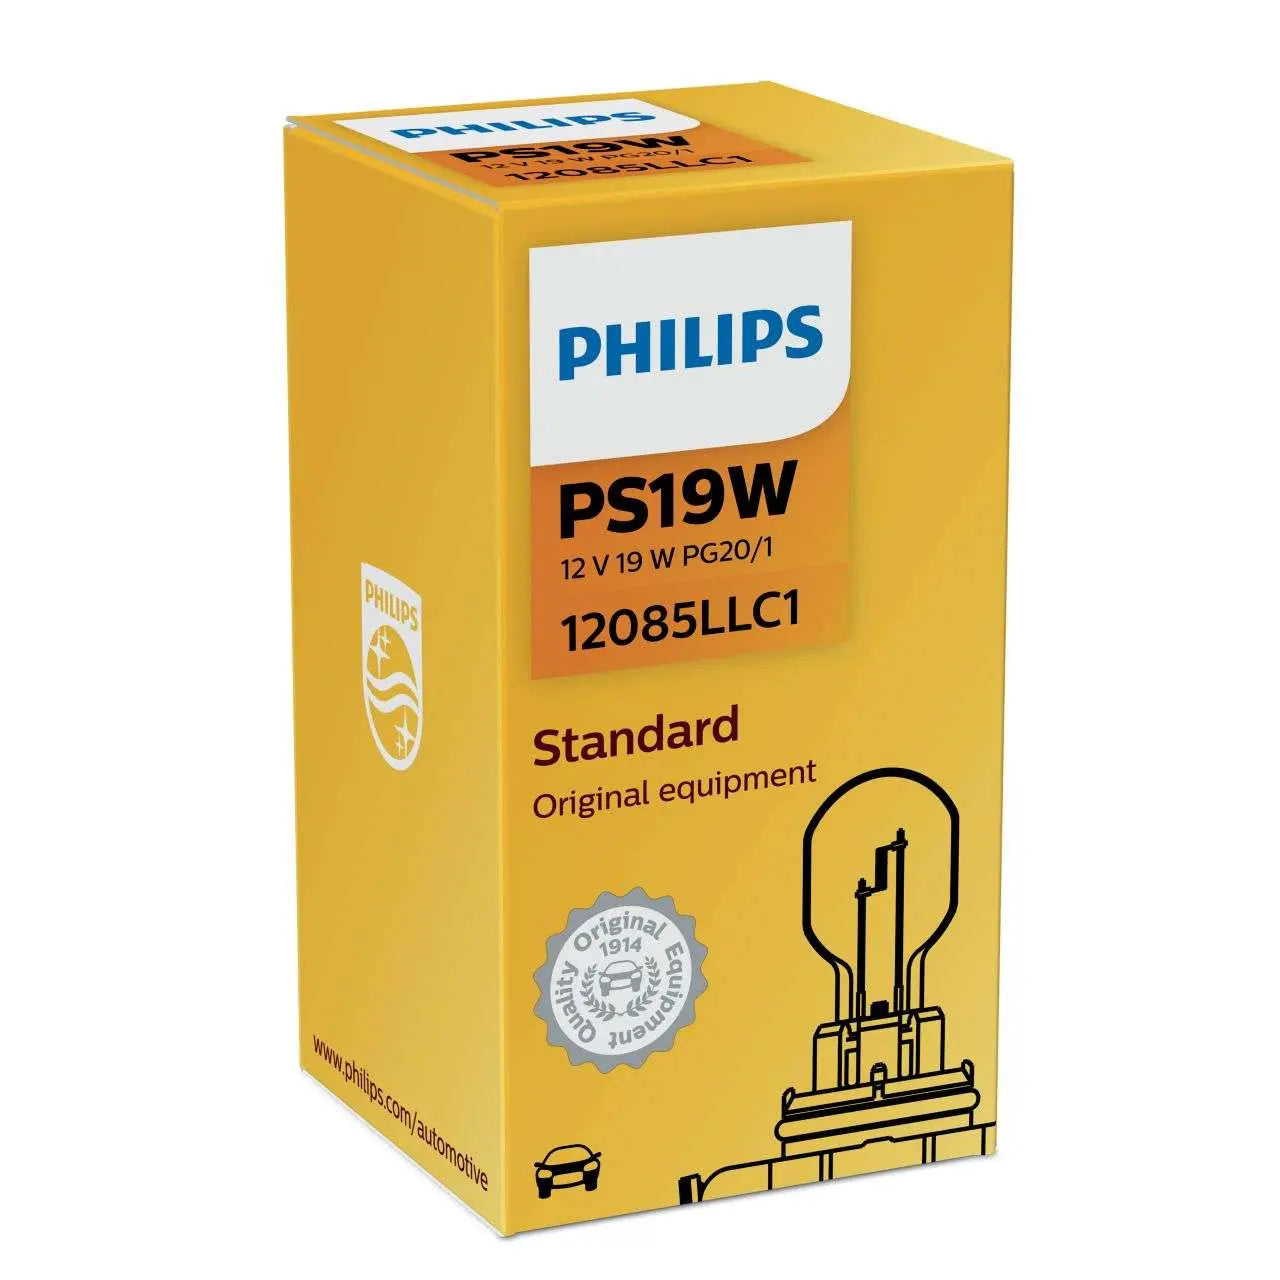 PS19W 12V 19W PG20/1 1 St. Philips - Samsuns Group